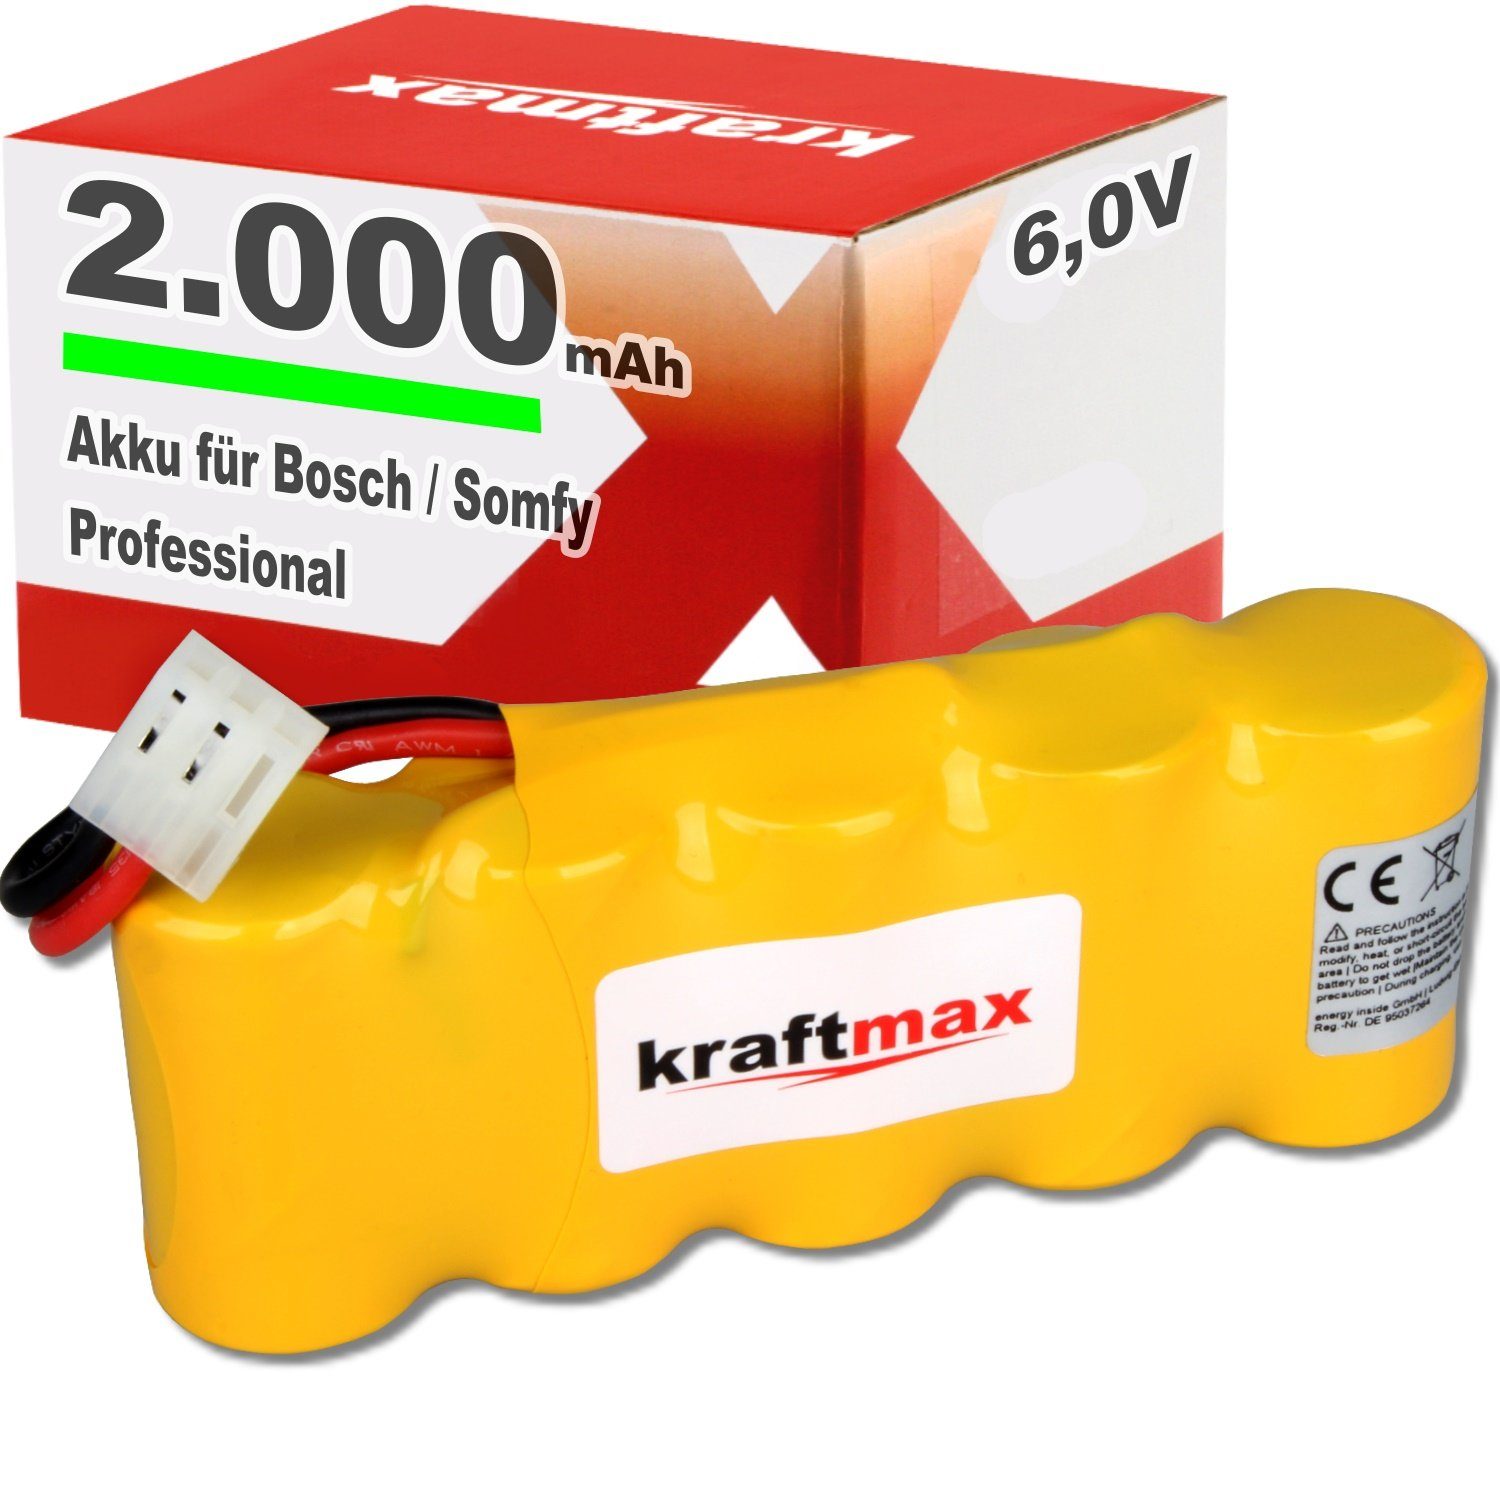 kraftmax Akku für Bosch SOMFY K8 / K10 / K12 - mit 2000mAh Leistung Akku (1 St)